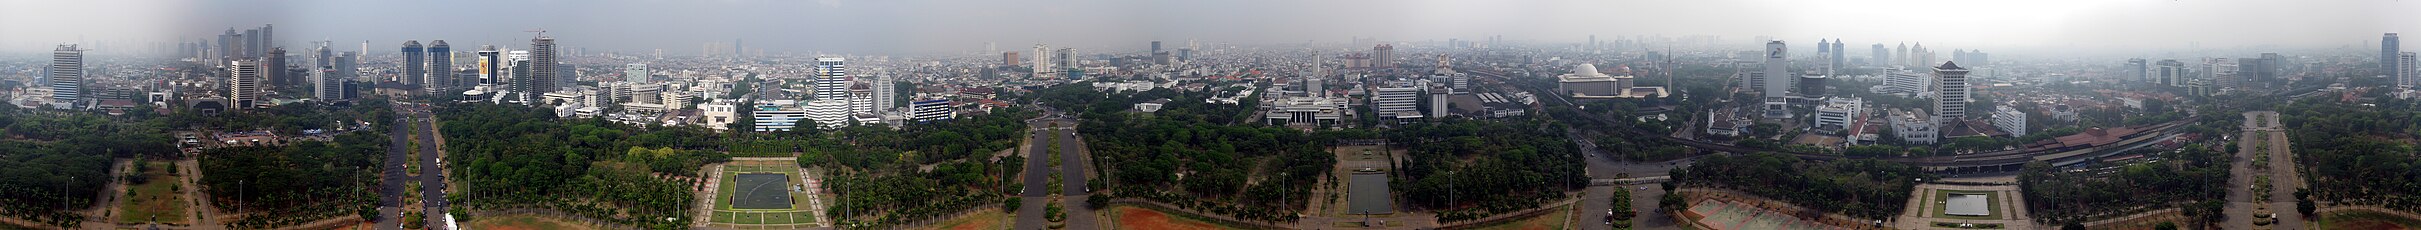 Panorama over Jakarta